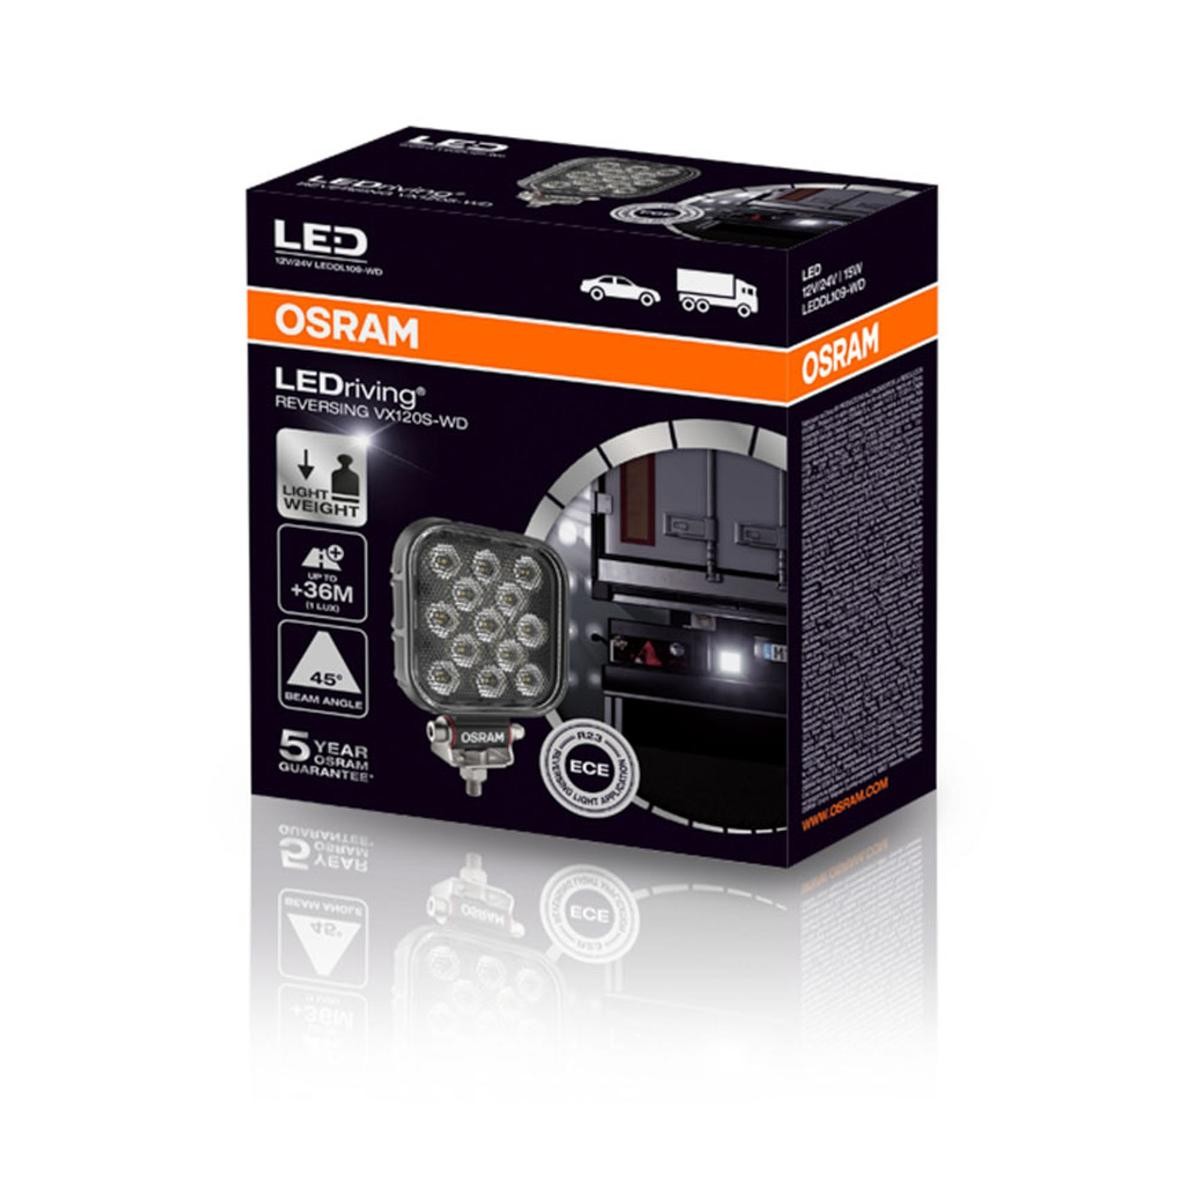 OSRAM LEDriving driving lights - Value Series LEDDL109WD Reverse lights Fiat Punto mk3 199 1.4 Bifuel 78 hp Petrol/Liquified Petroleum Gas (LPG) 2015 price